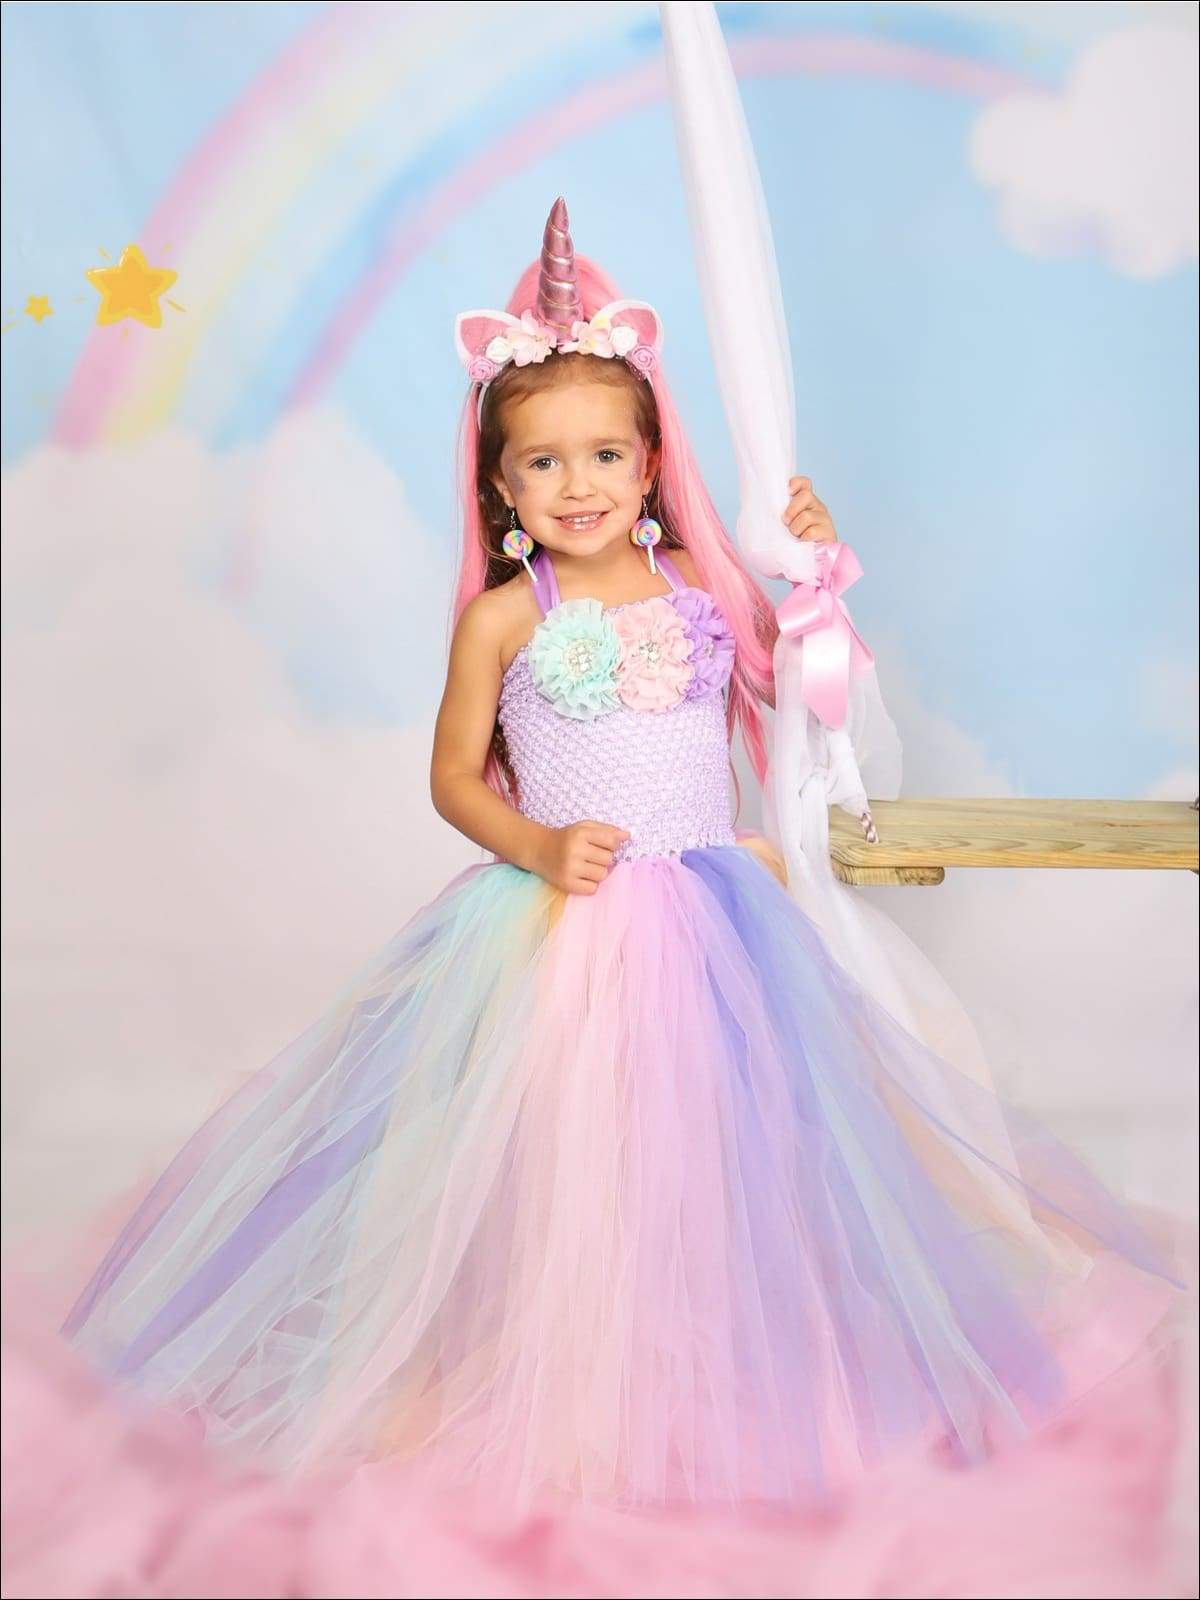 Kids Halloween Costumes| Unicorn Princess Tutu Dress - Mia Belle Girls